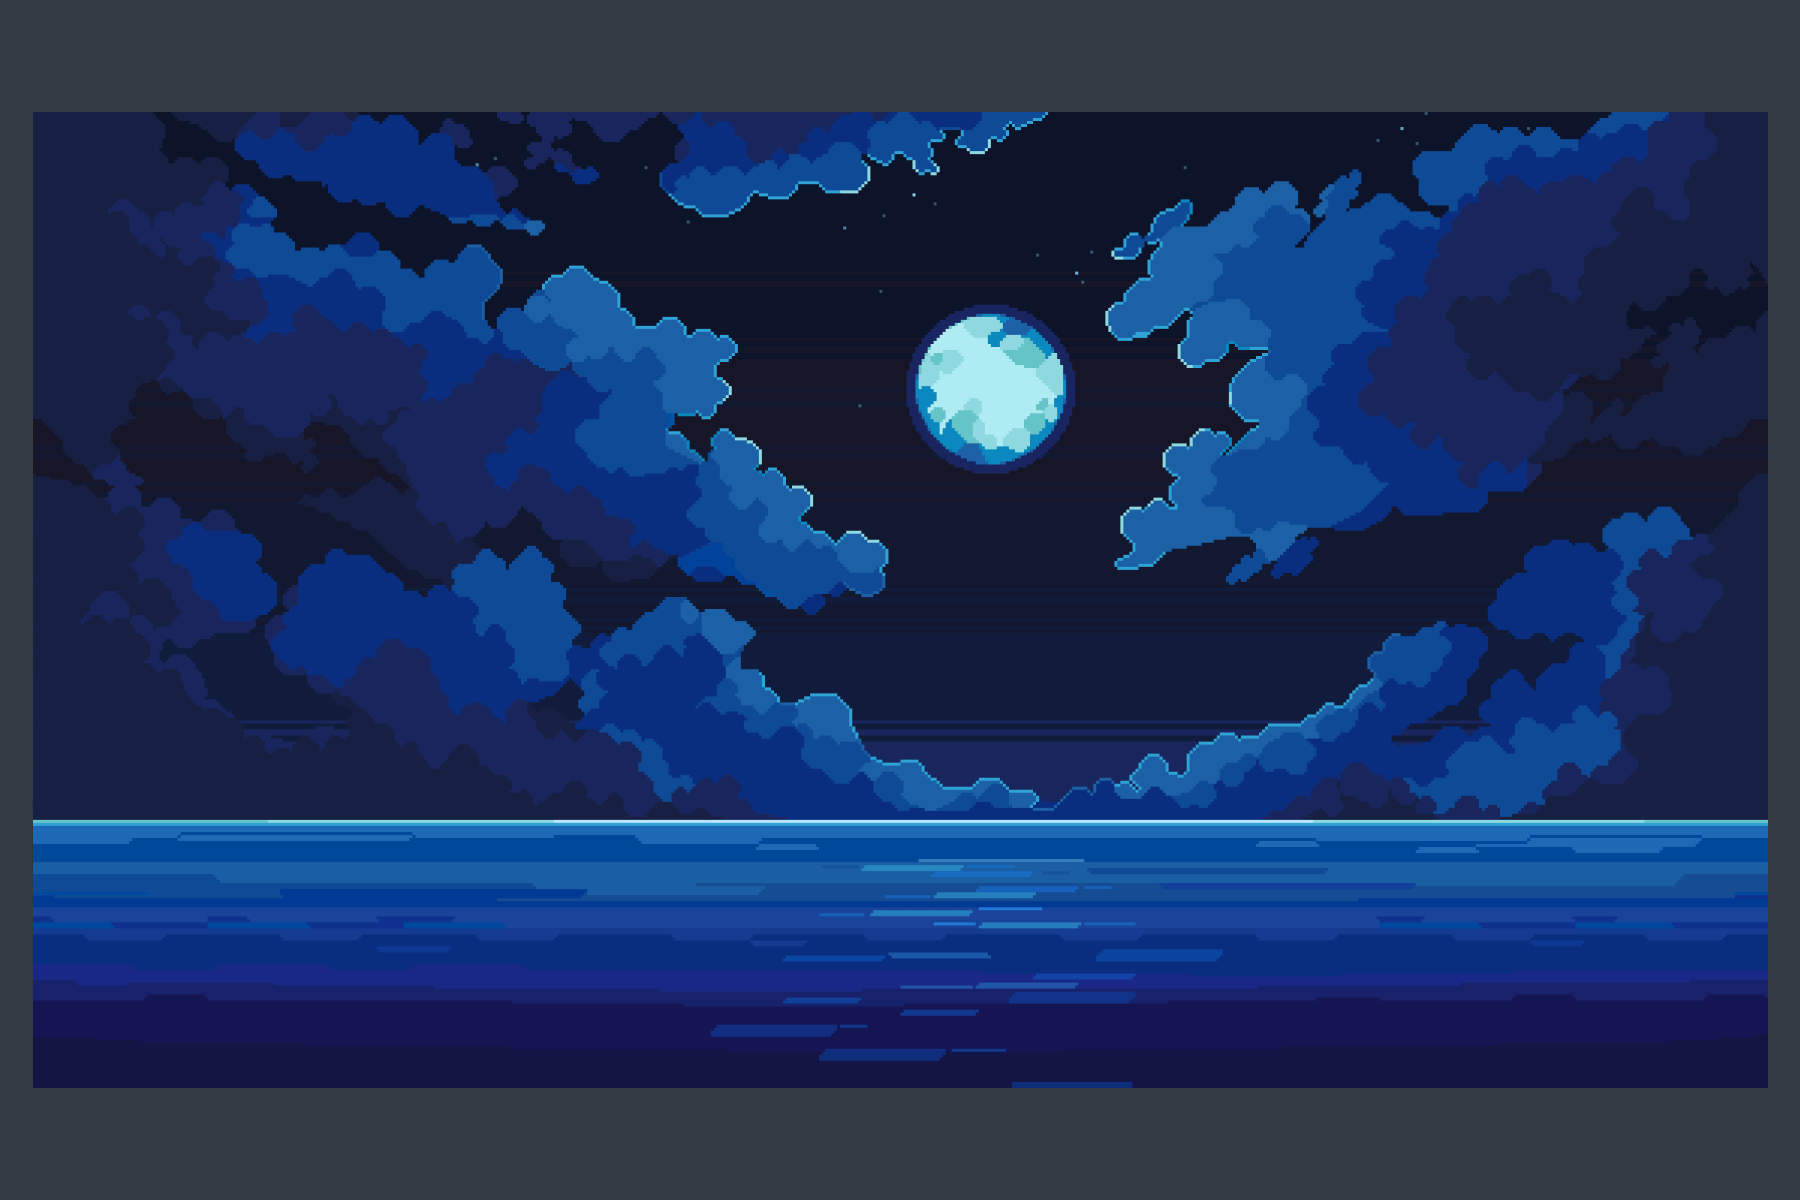 Ocean and Clouds Free Pixel Art Backgrounds - CraftPix.net